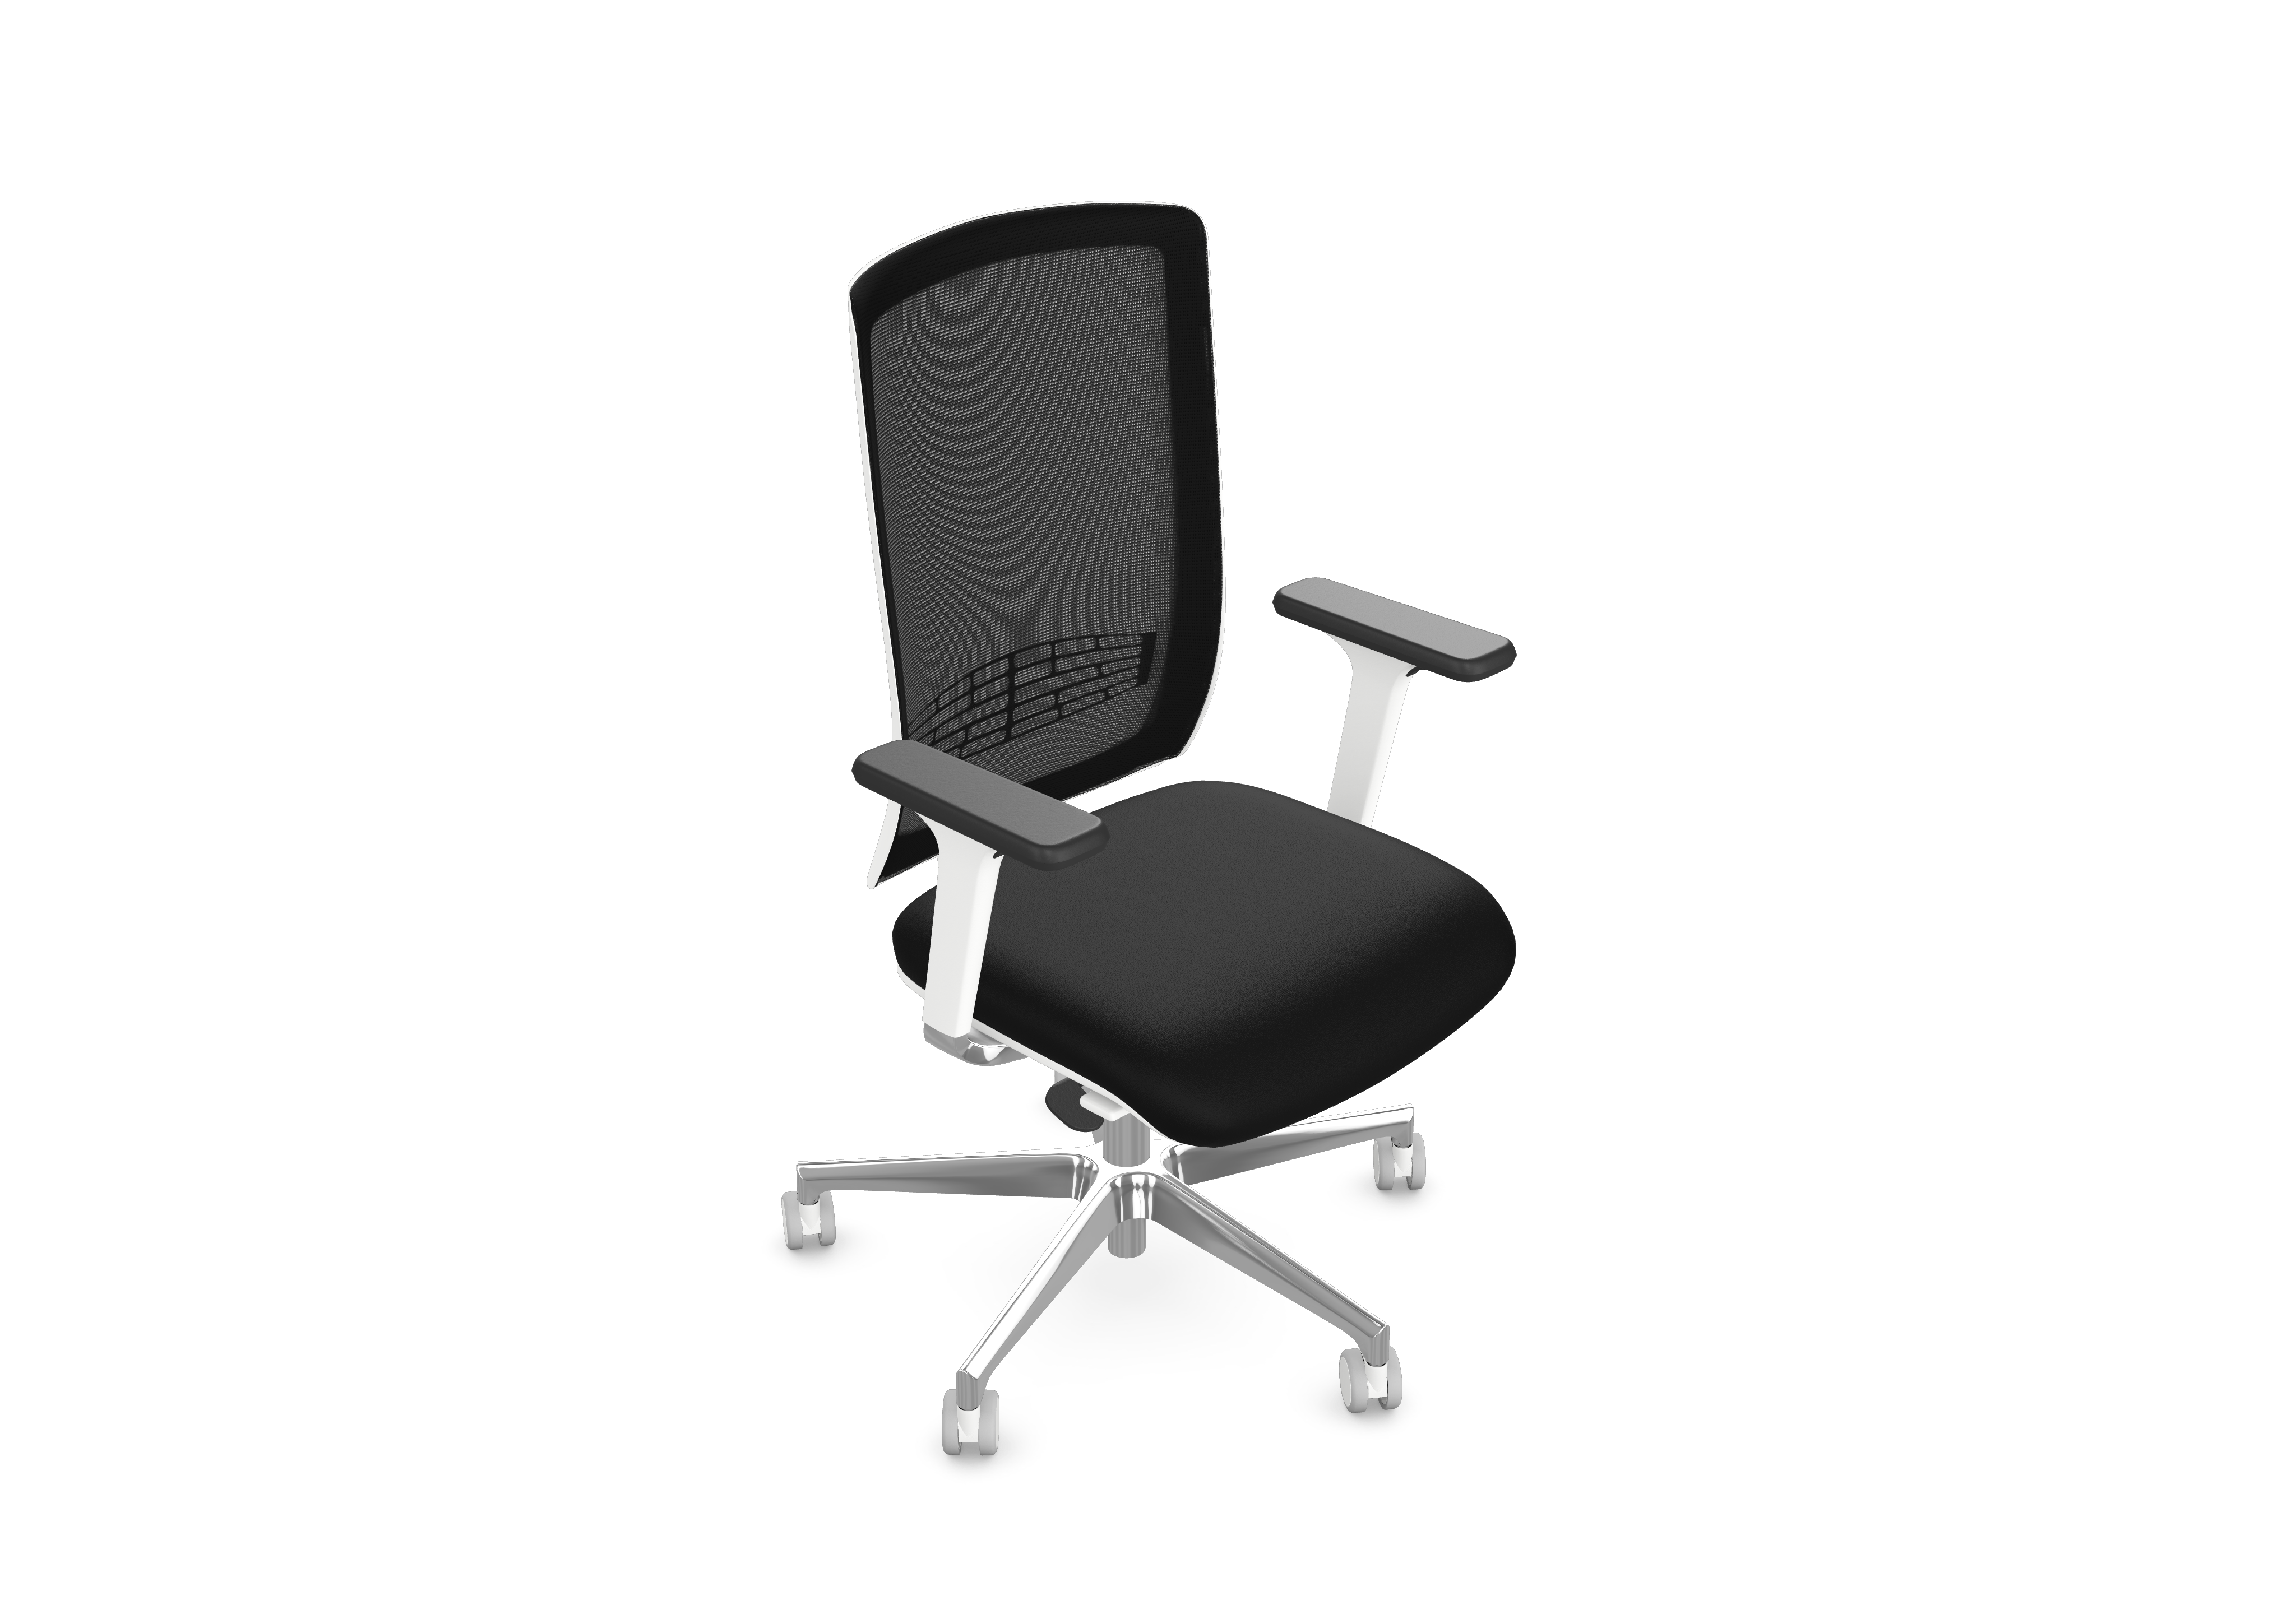 Begin White Swivel Chair, Mesh Backrest, Chrome Base, Seat Slide, Lumbar Support, Zodiac Adjustable Arms